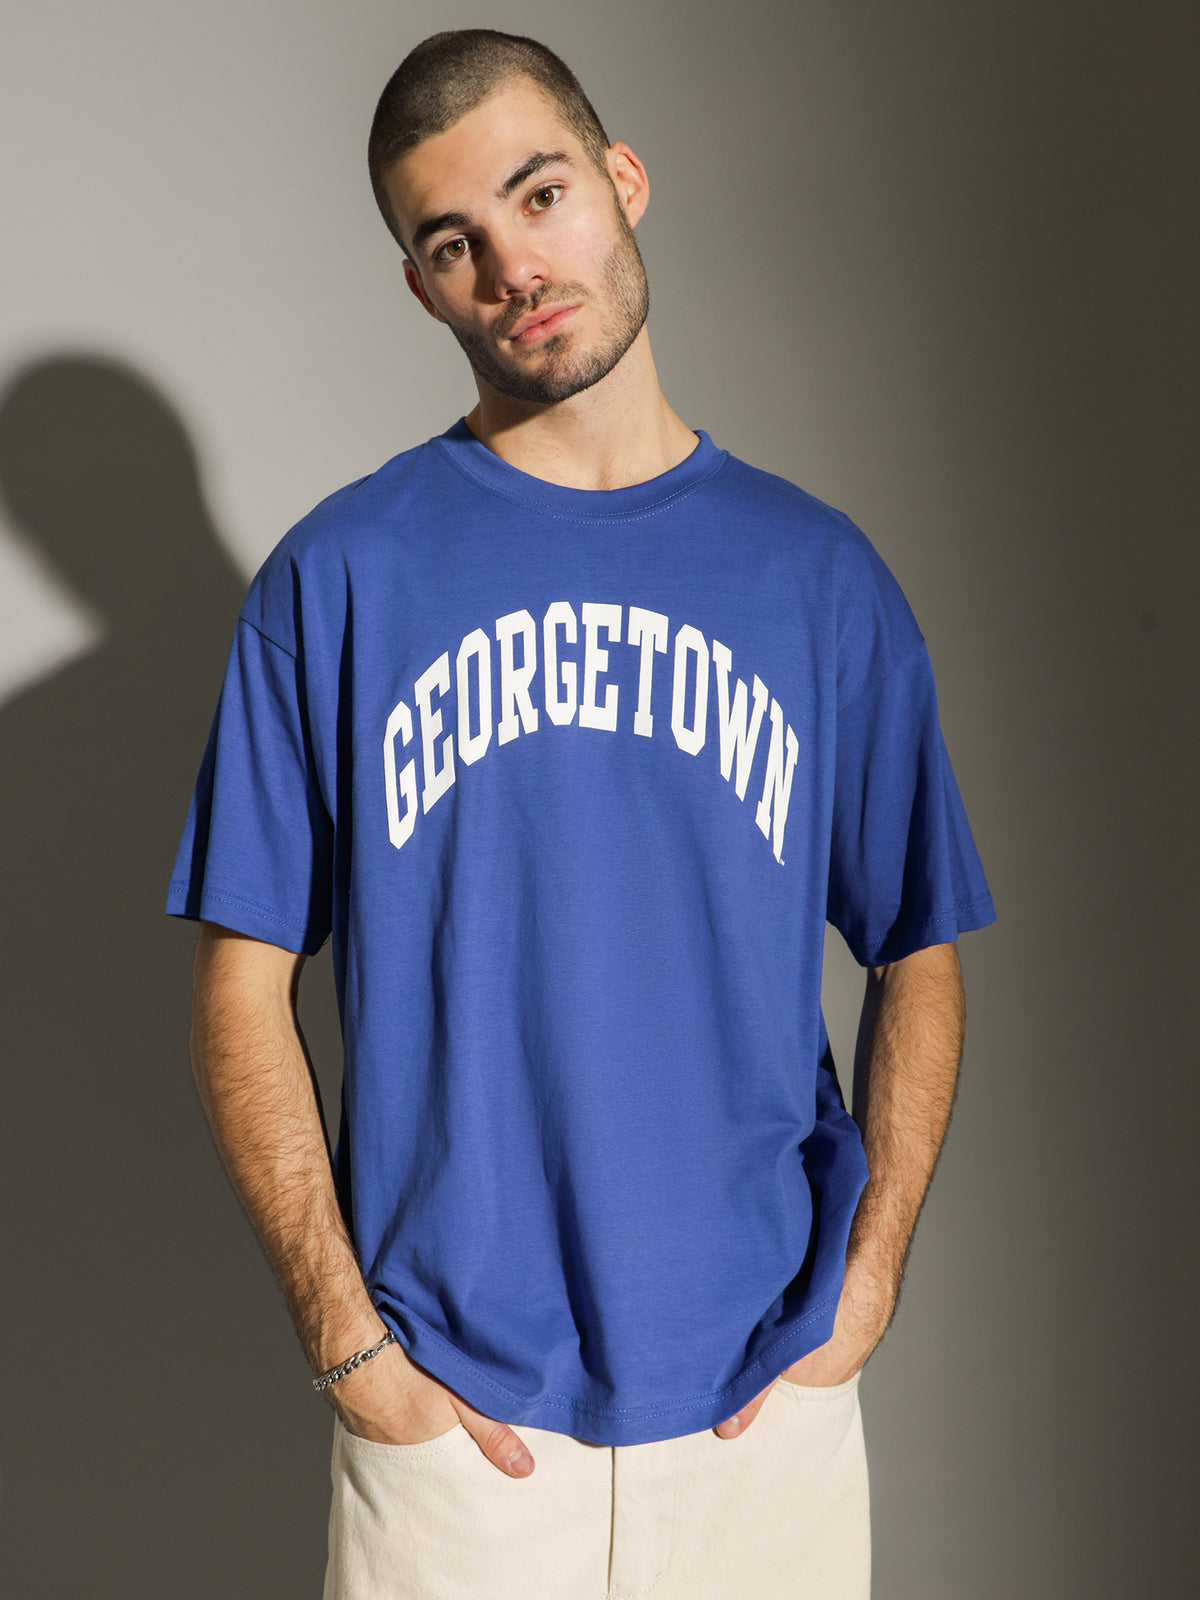 University Of Georgetown Workmark T-Shirt in Royal Blue